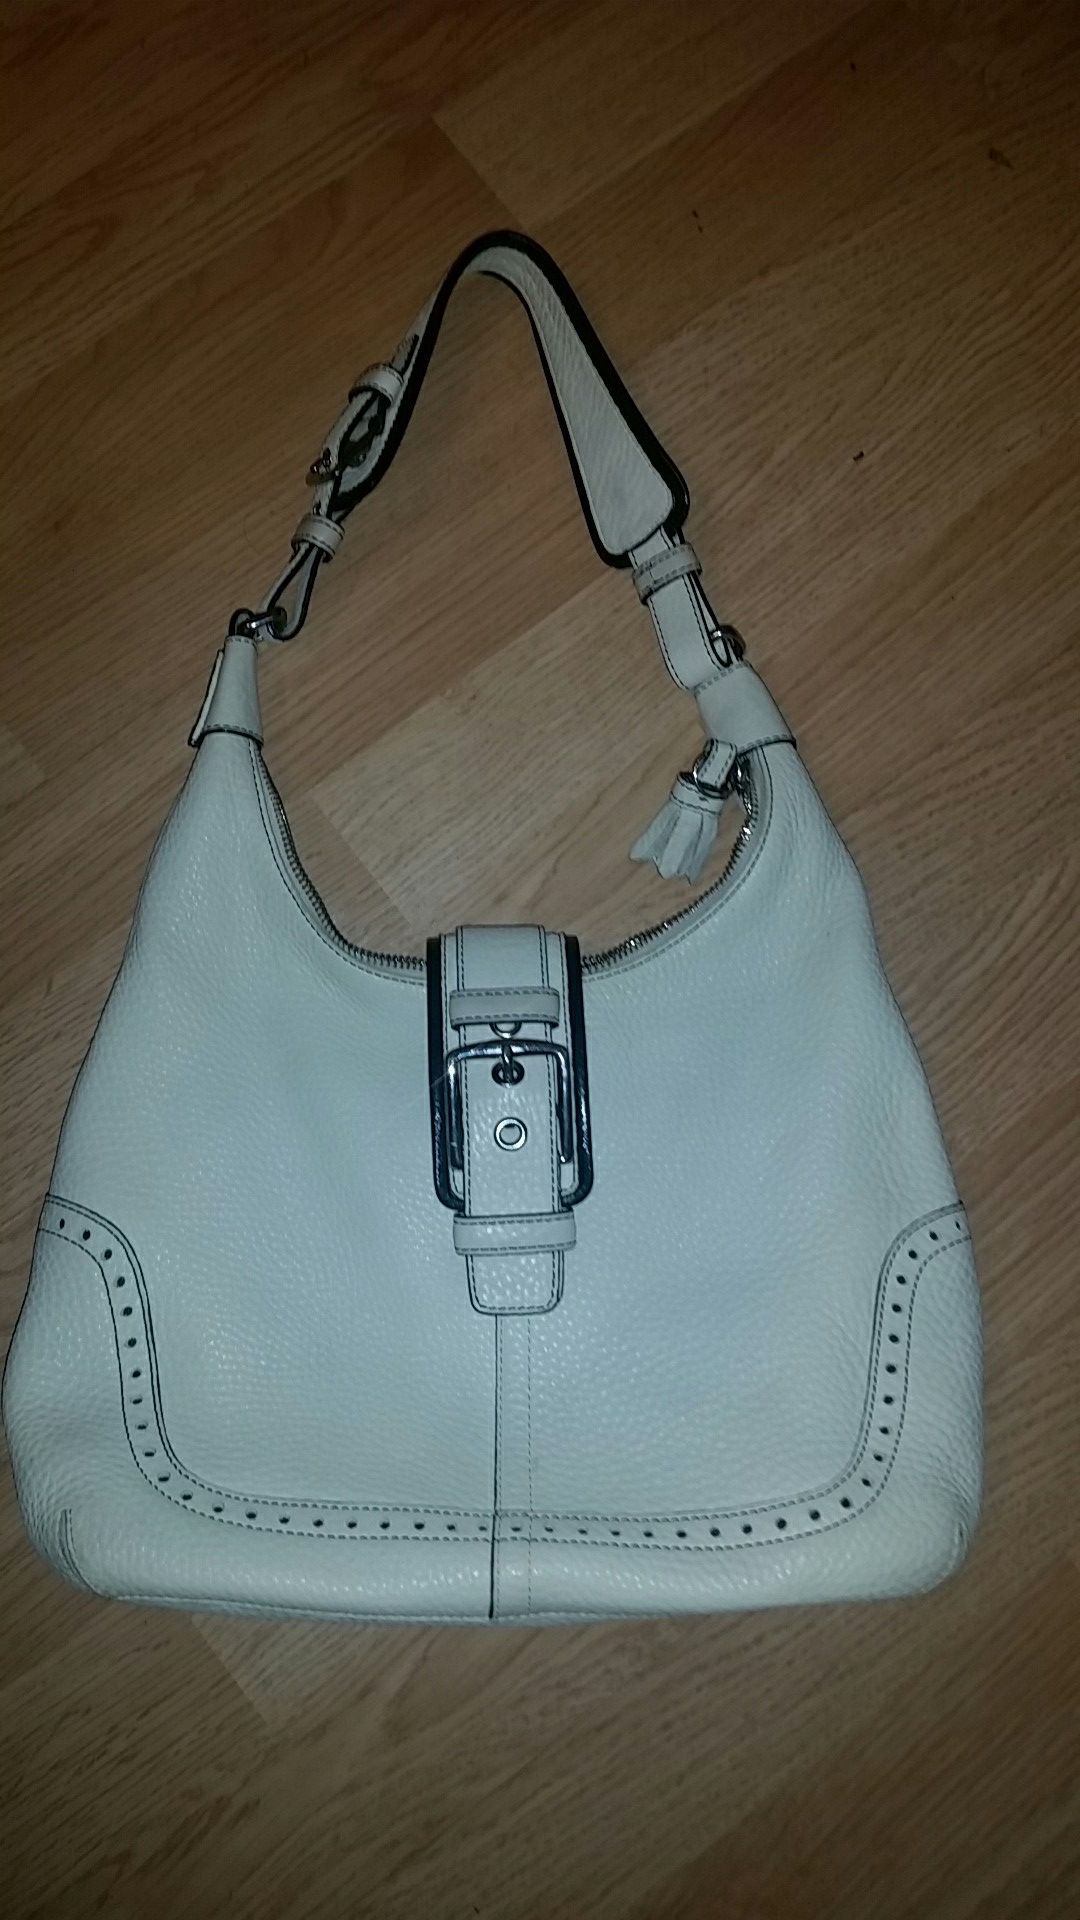 Authentic Coach woman's handbag